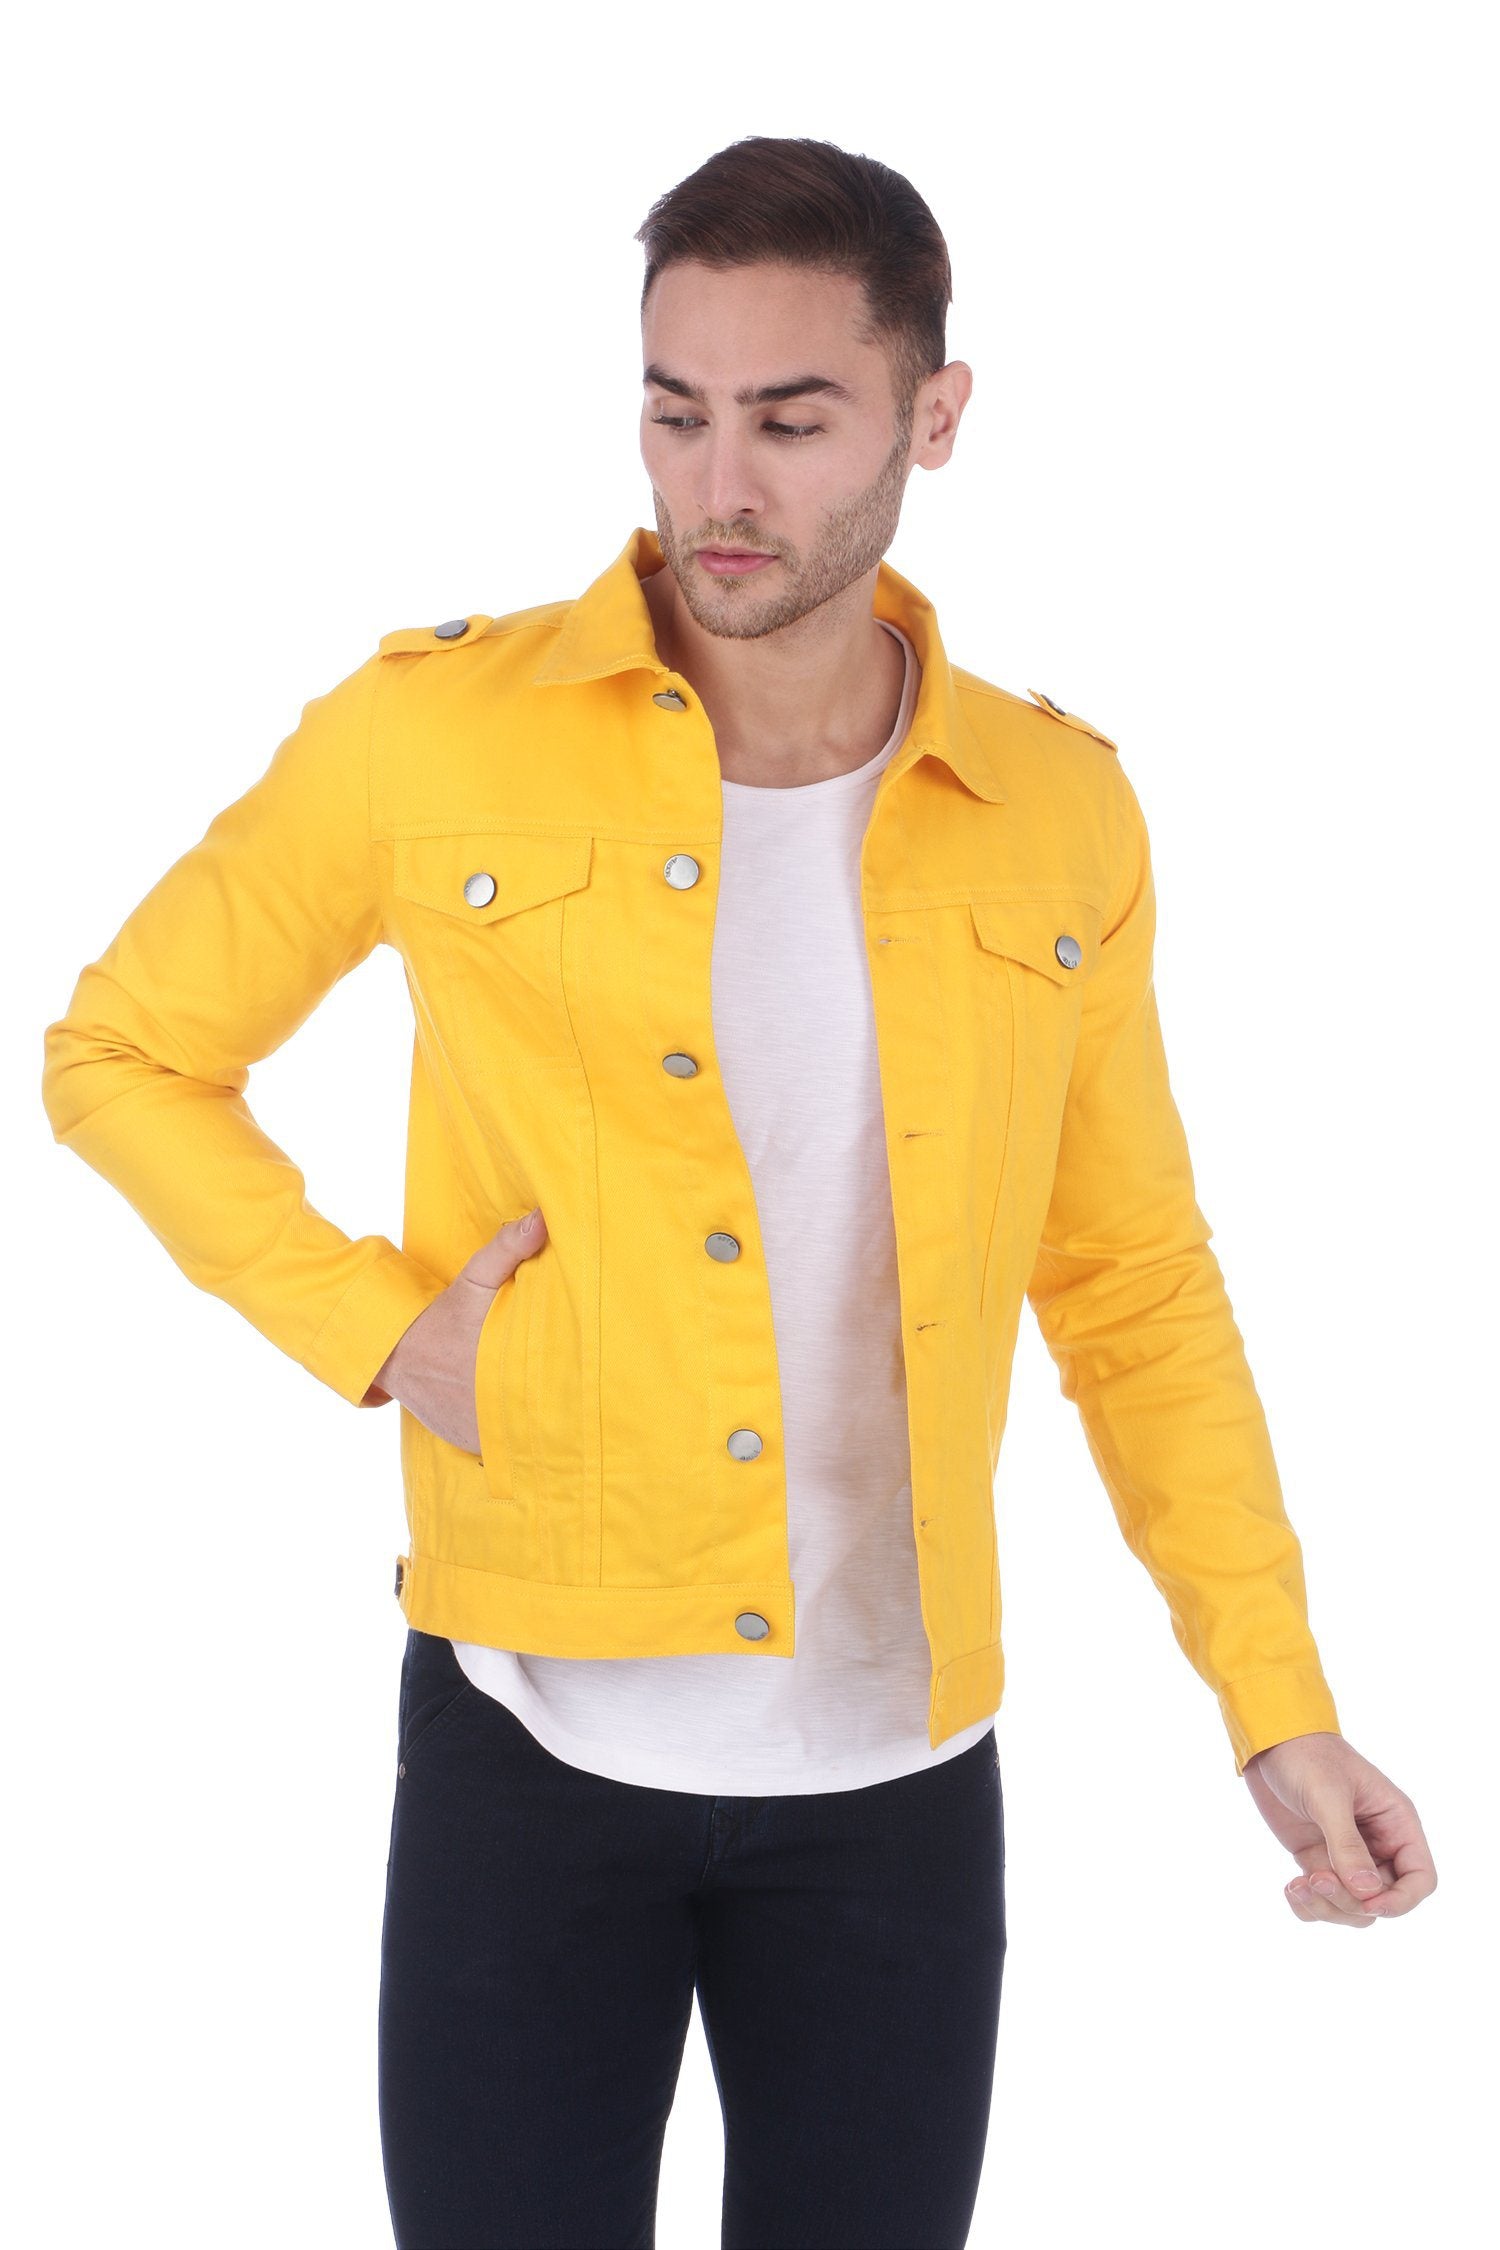 denim yellow jacket